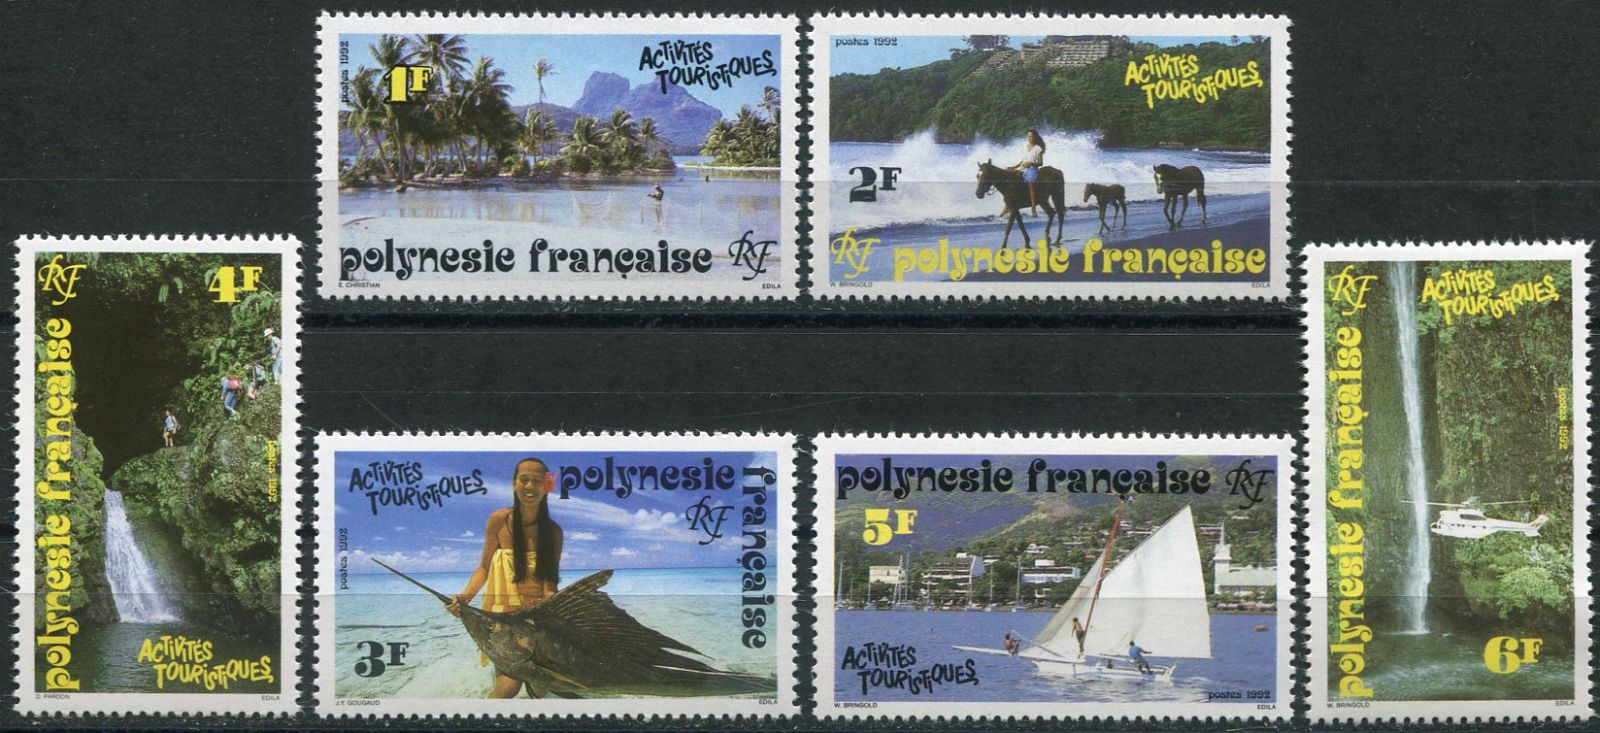 Post France (1992) MiNr. 599 - 604 ** - Fr. Polynesie - Turismus